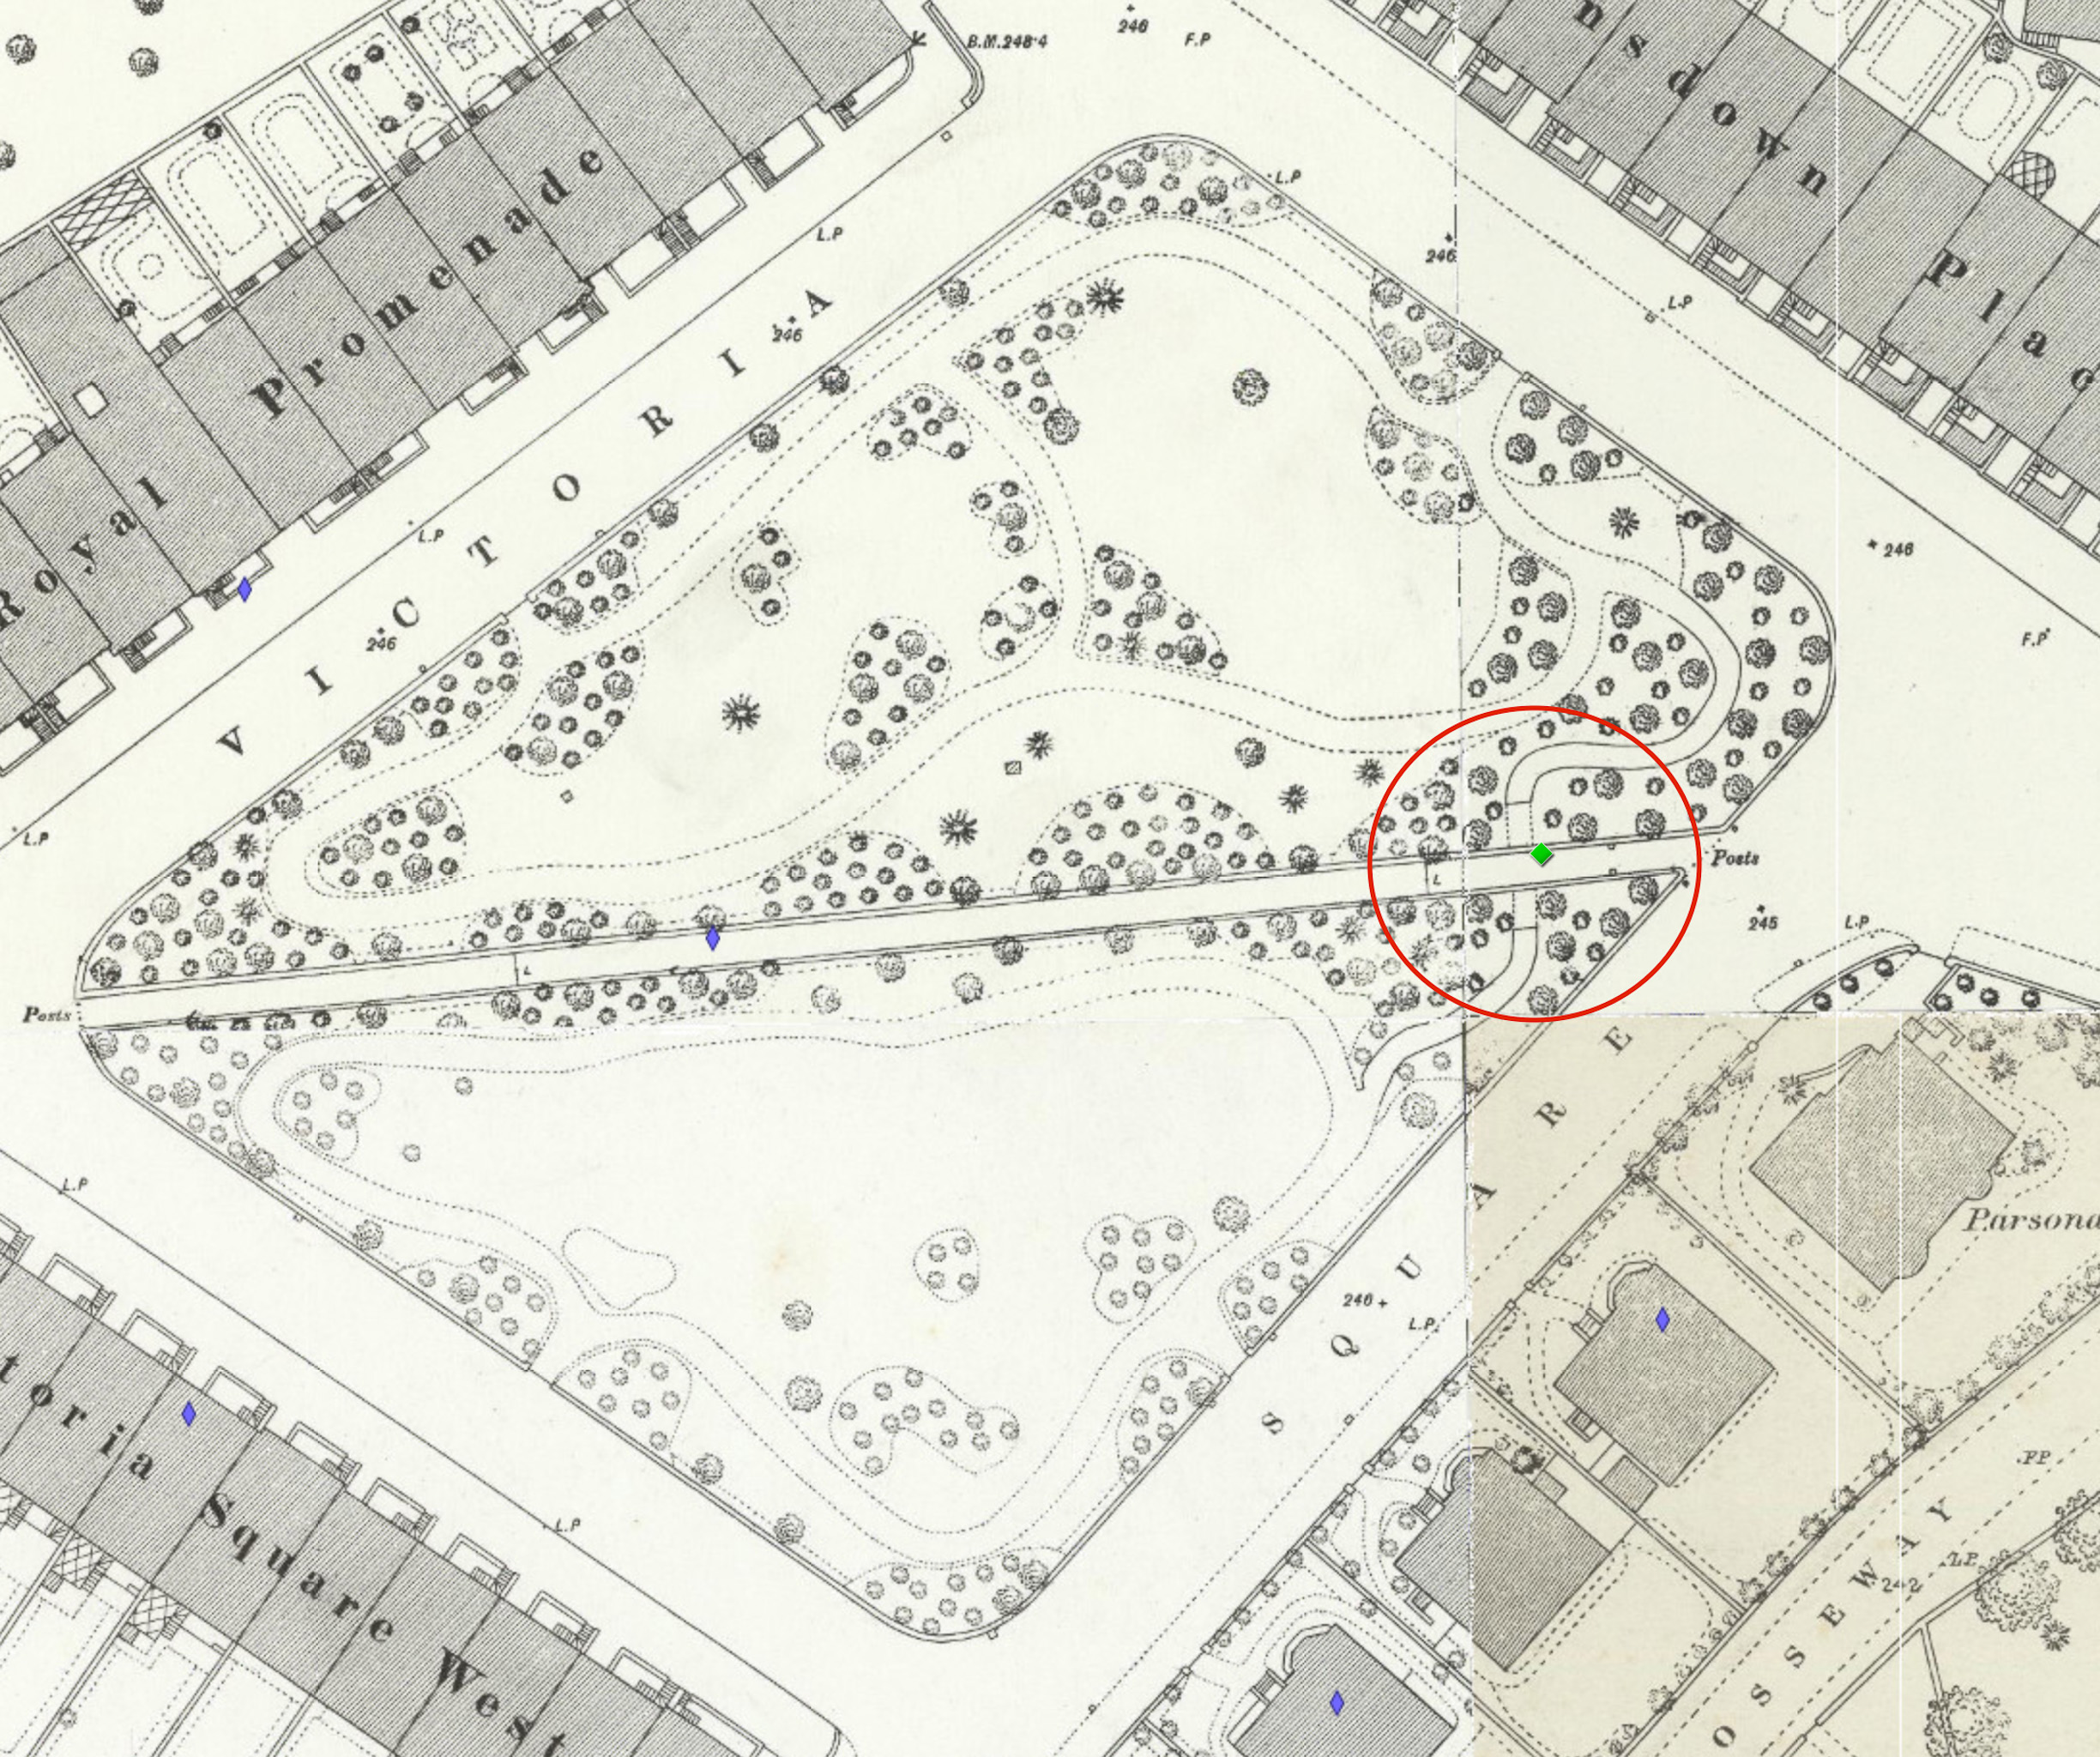 Victoria Square Underpass
1879-1888 Town Plans, via Know Your Place
